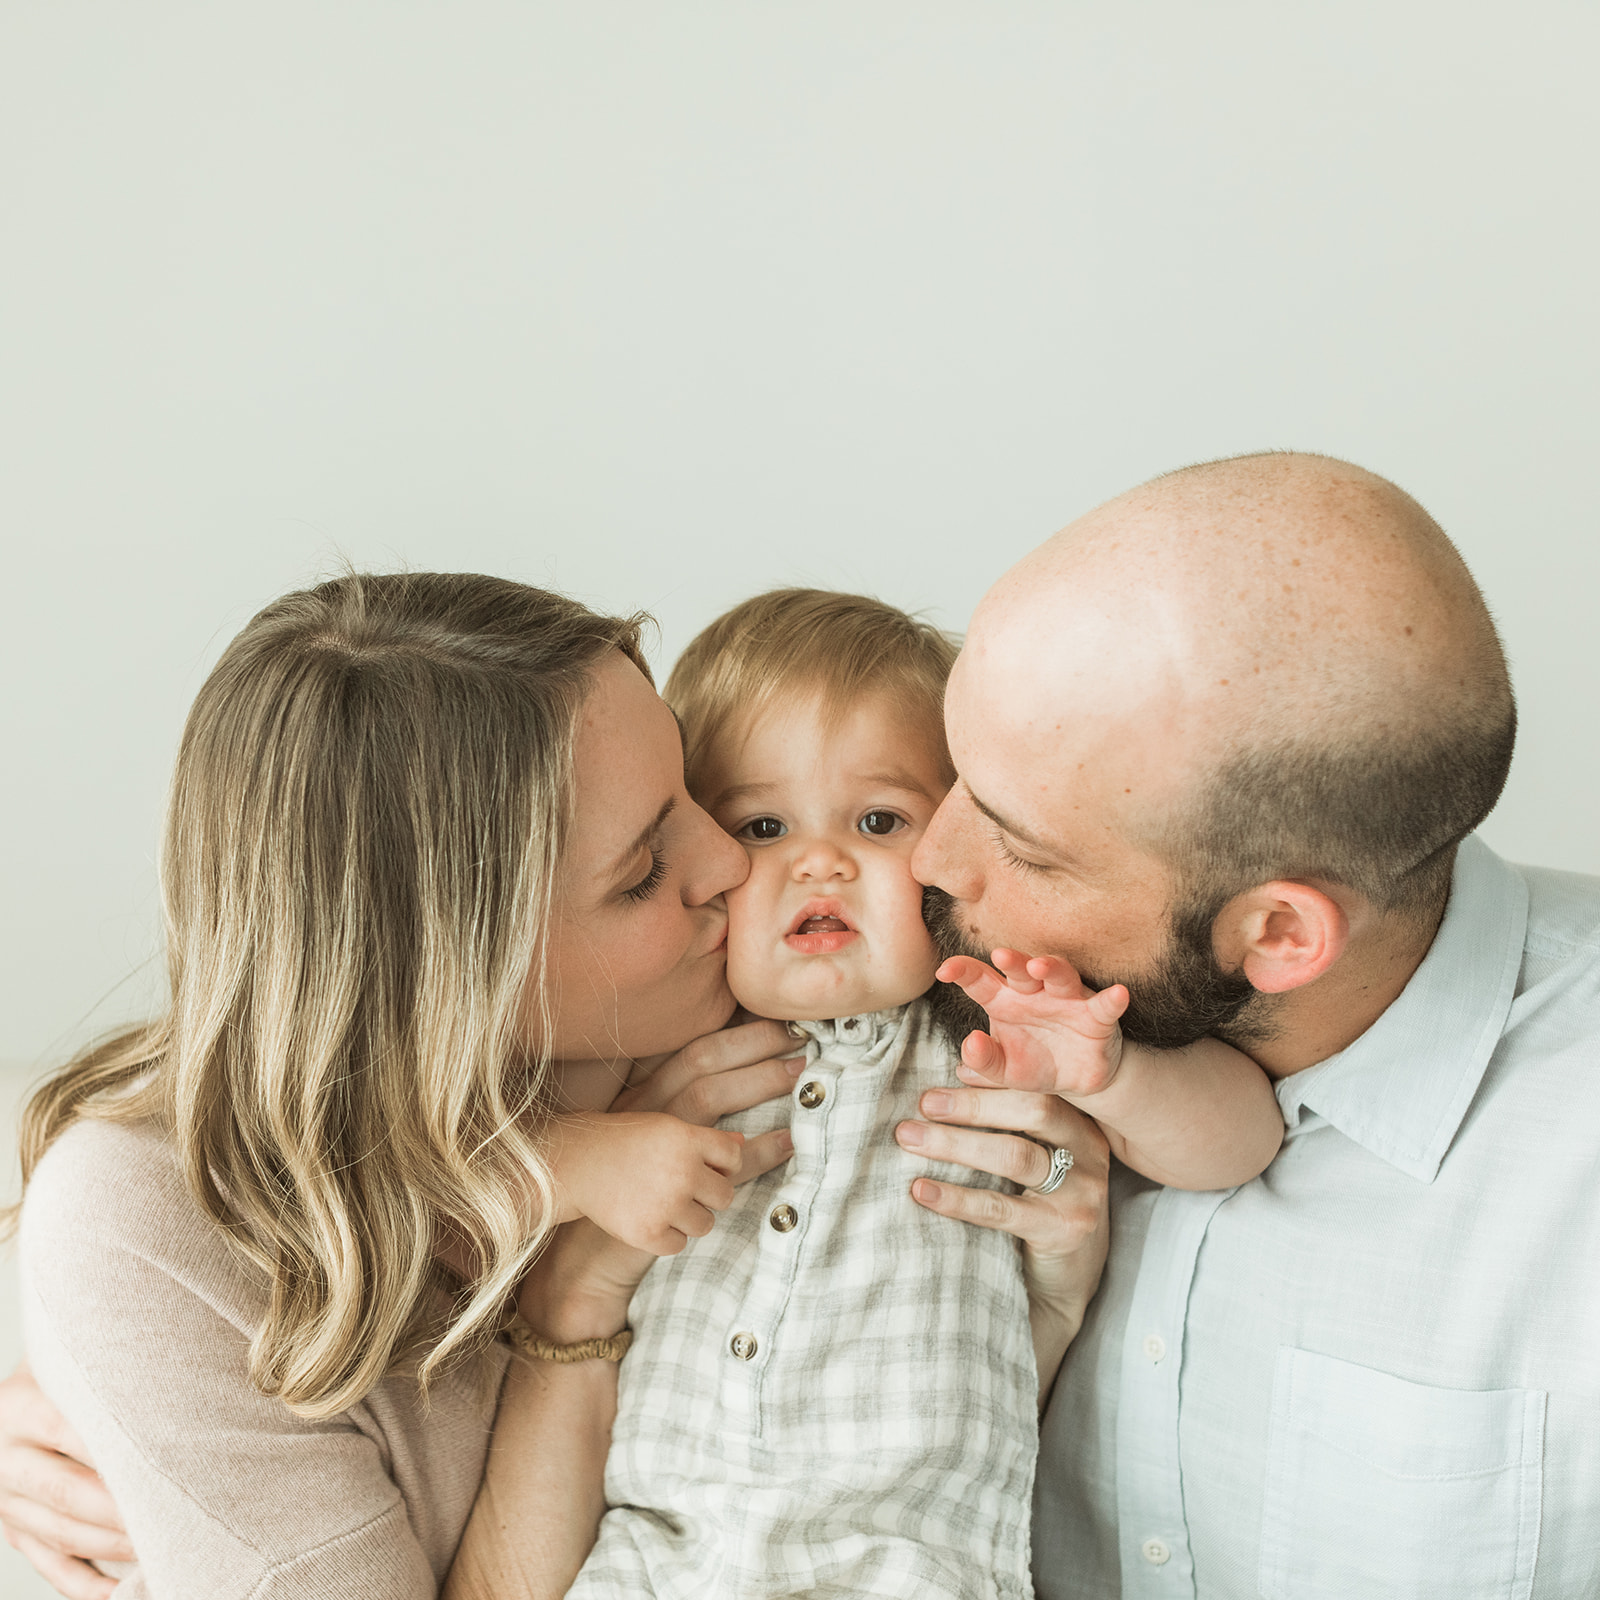 braden's 1st birthday photoshoot in nashville studio. parents kissing their baby boy